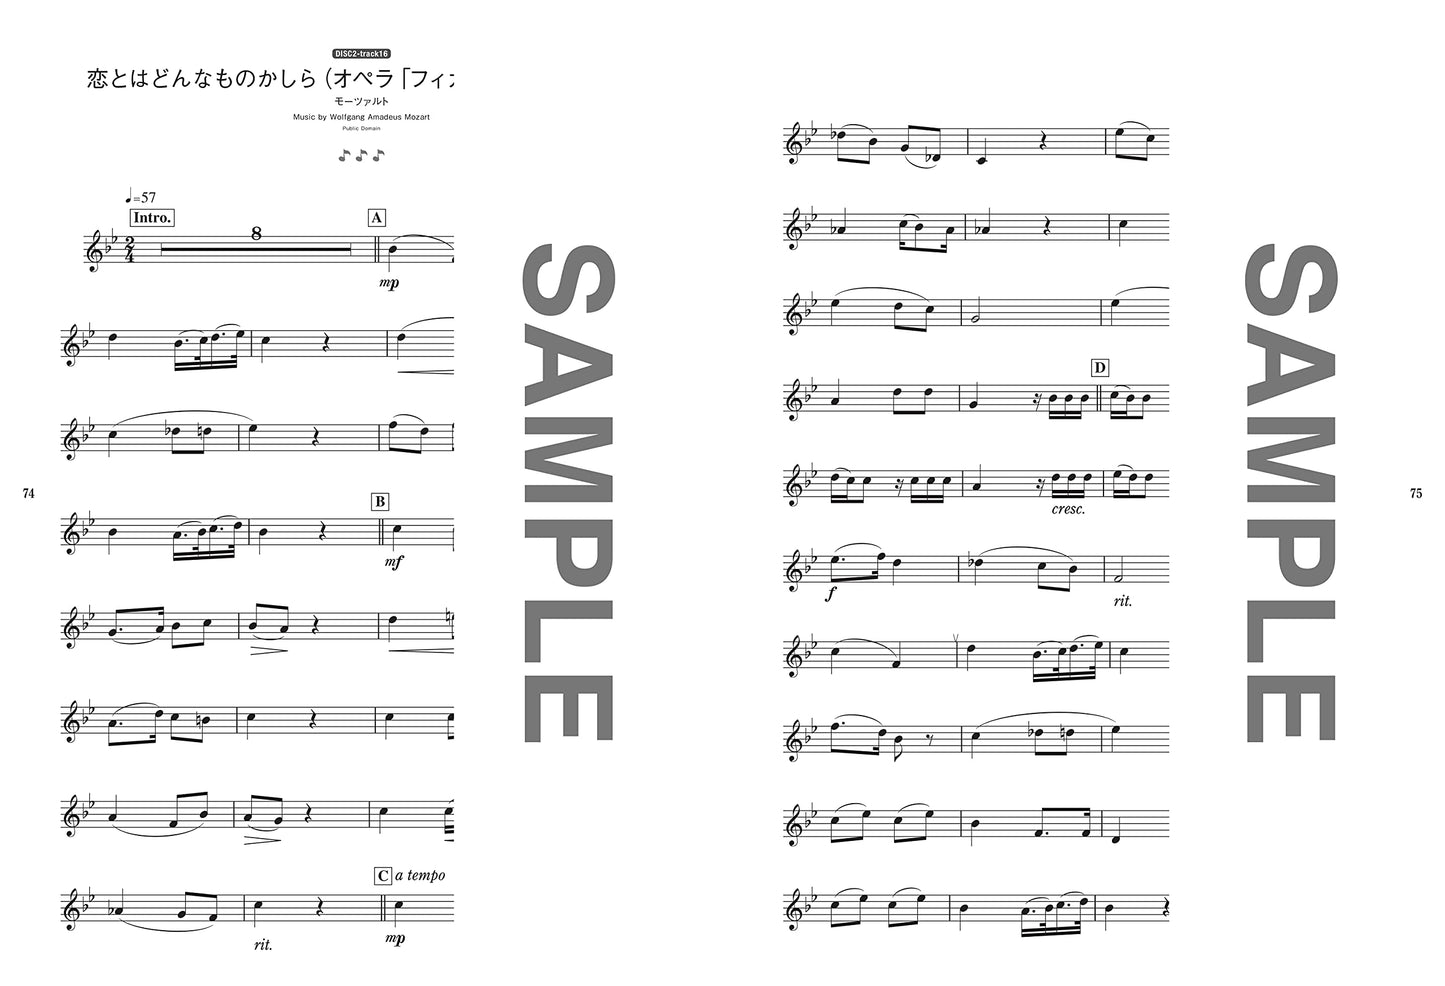 Popular J-POP Repertoire for Flute Solo(Upper-Intermediate) by original music keys w/CD(Backing Tracks) Sheet Music Book